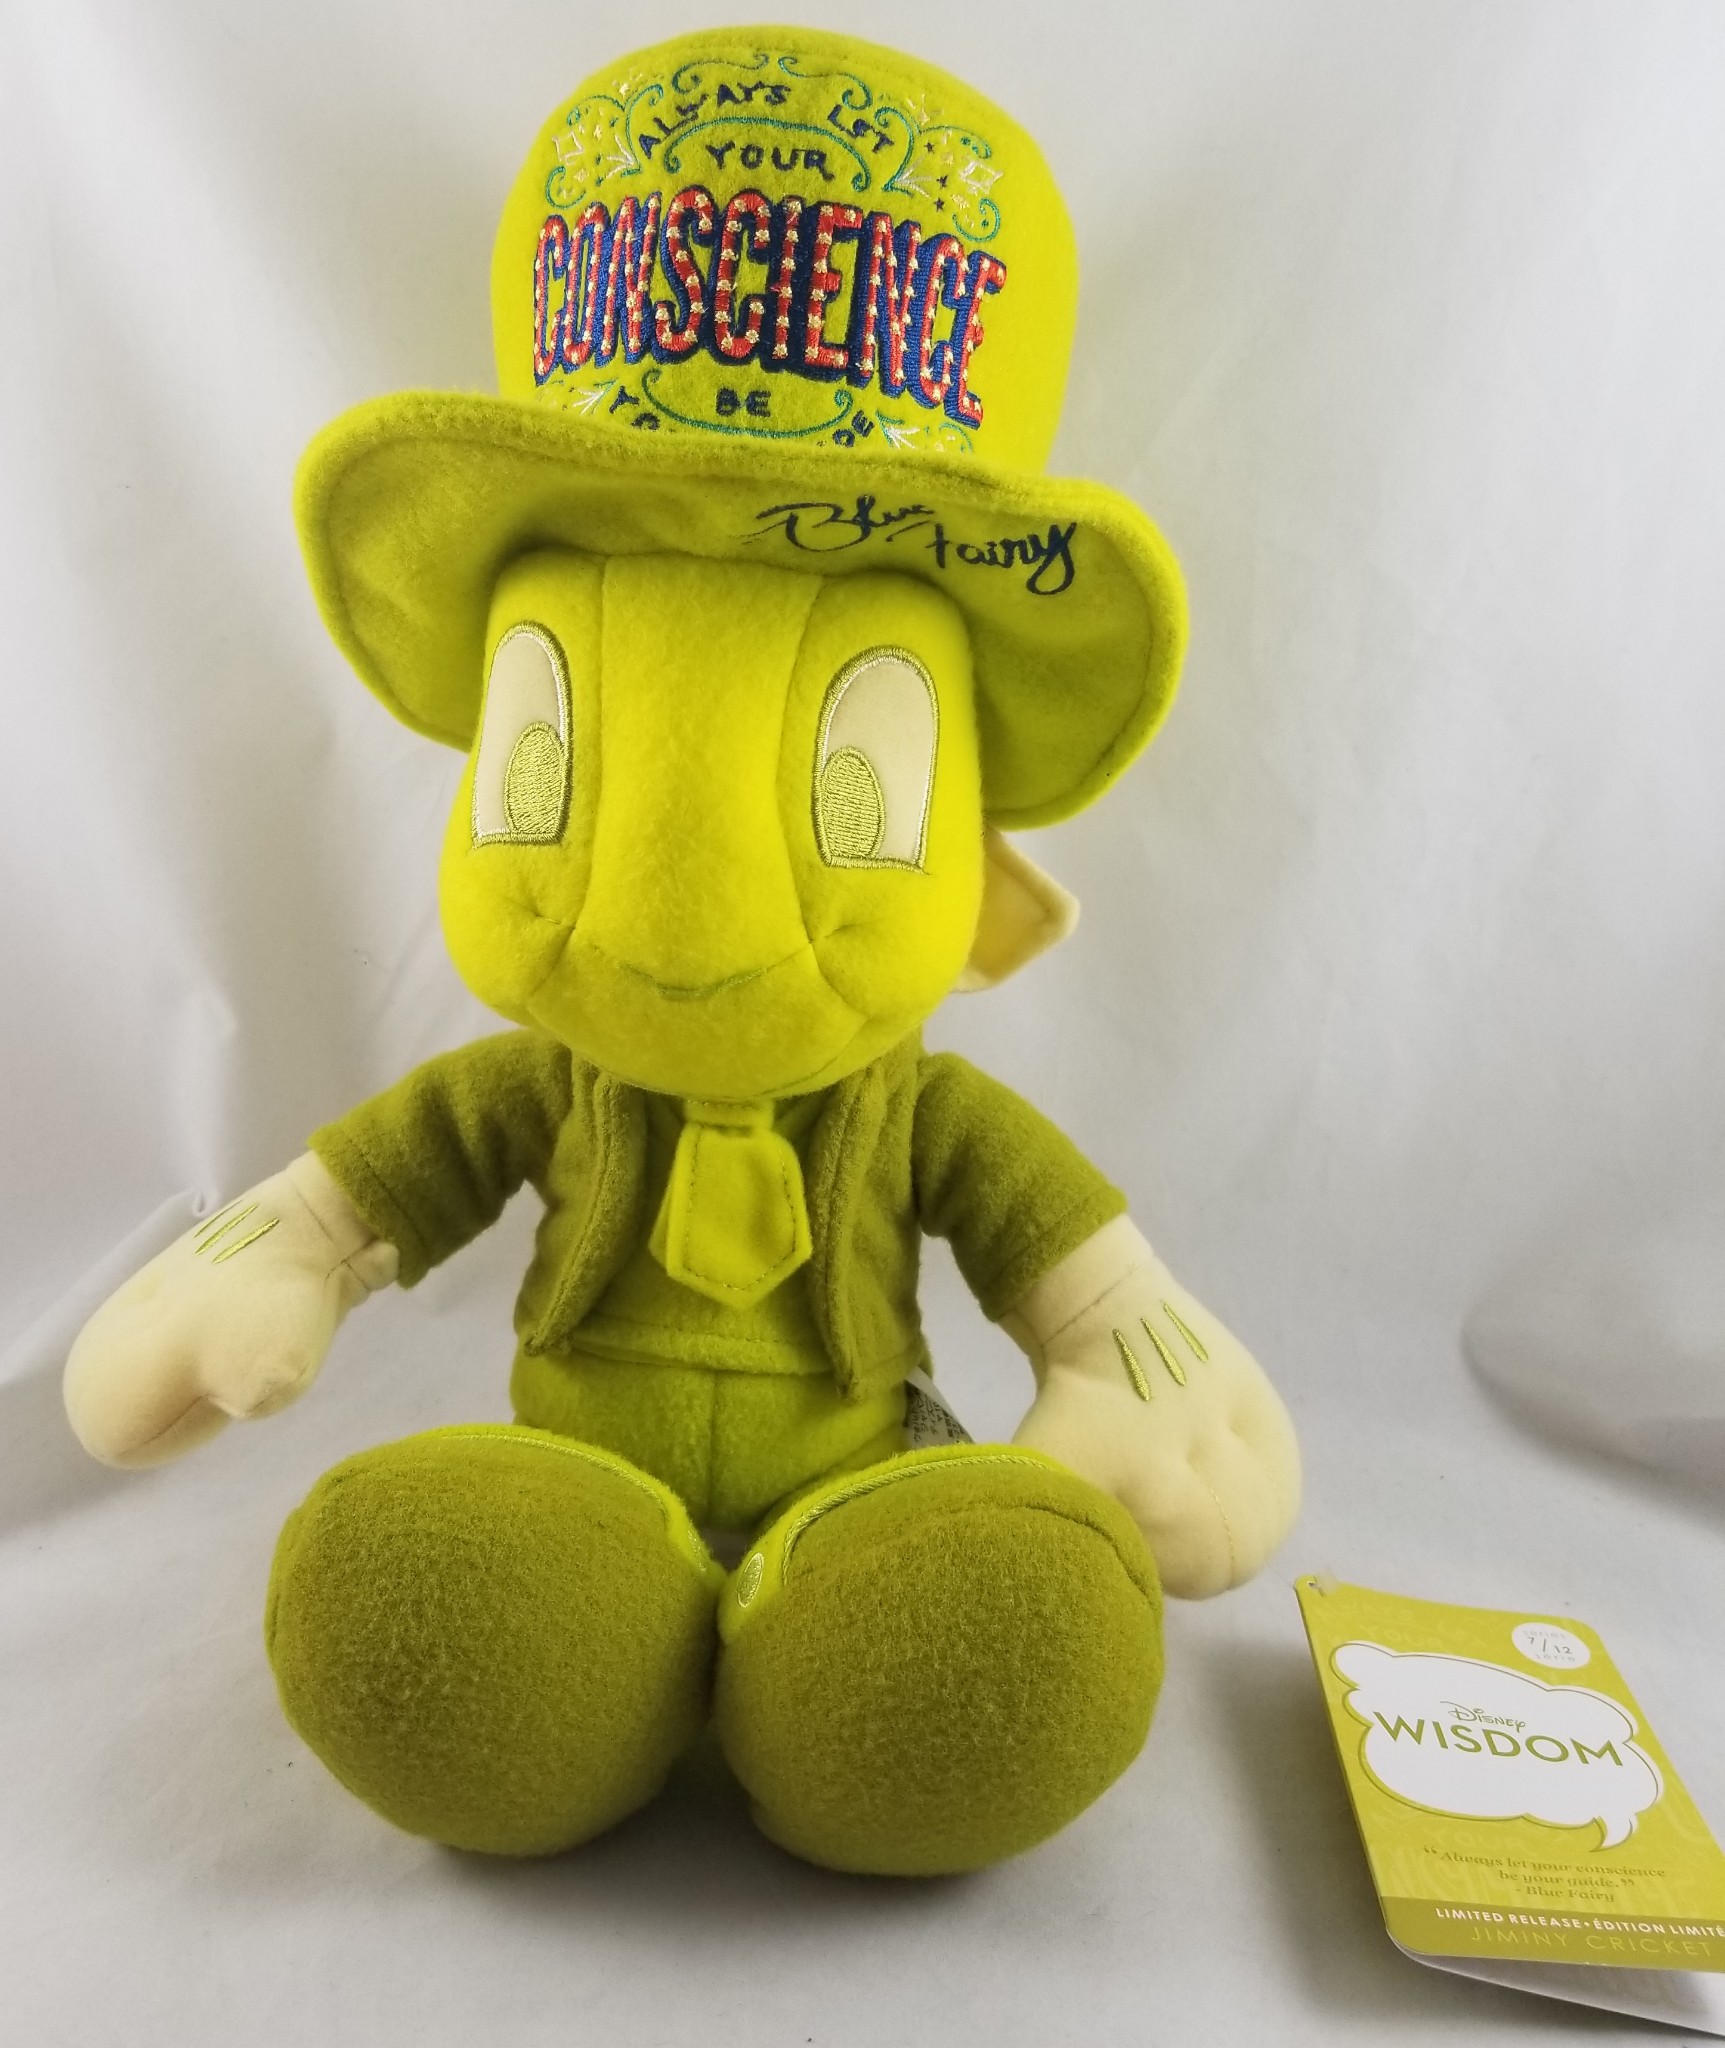 Disney Pinocchio Wisdom Jiminy Cricket Limited Edition Plush for sale online 